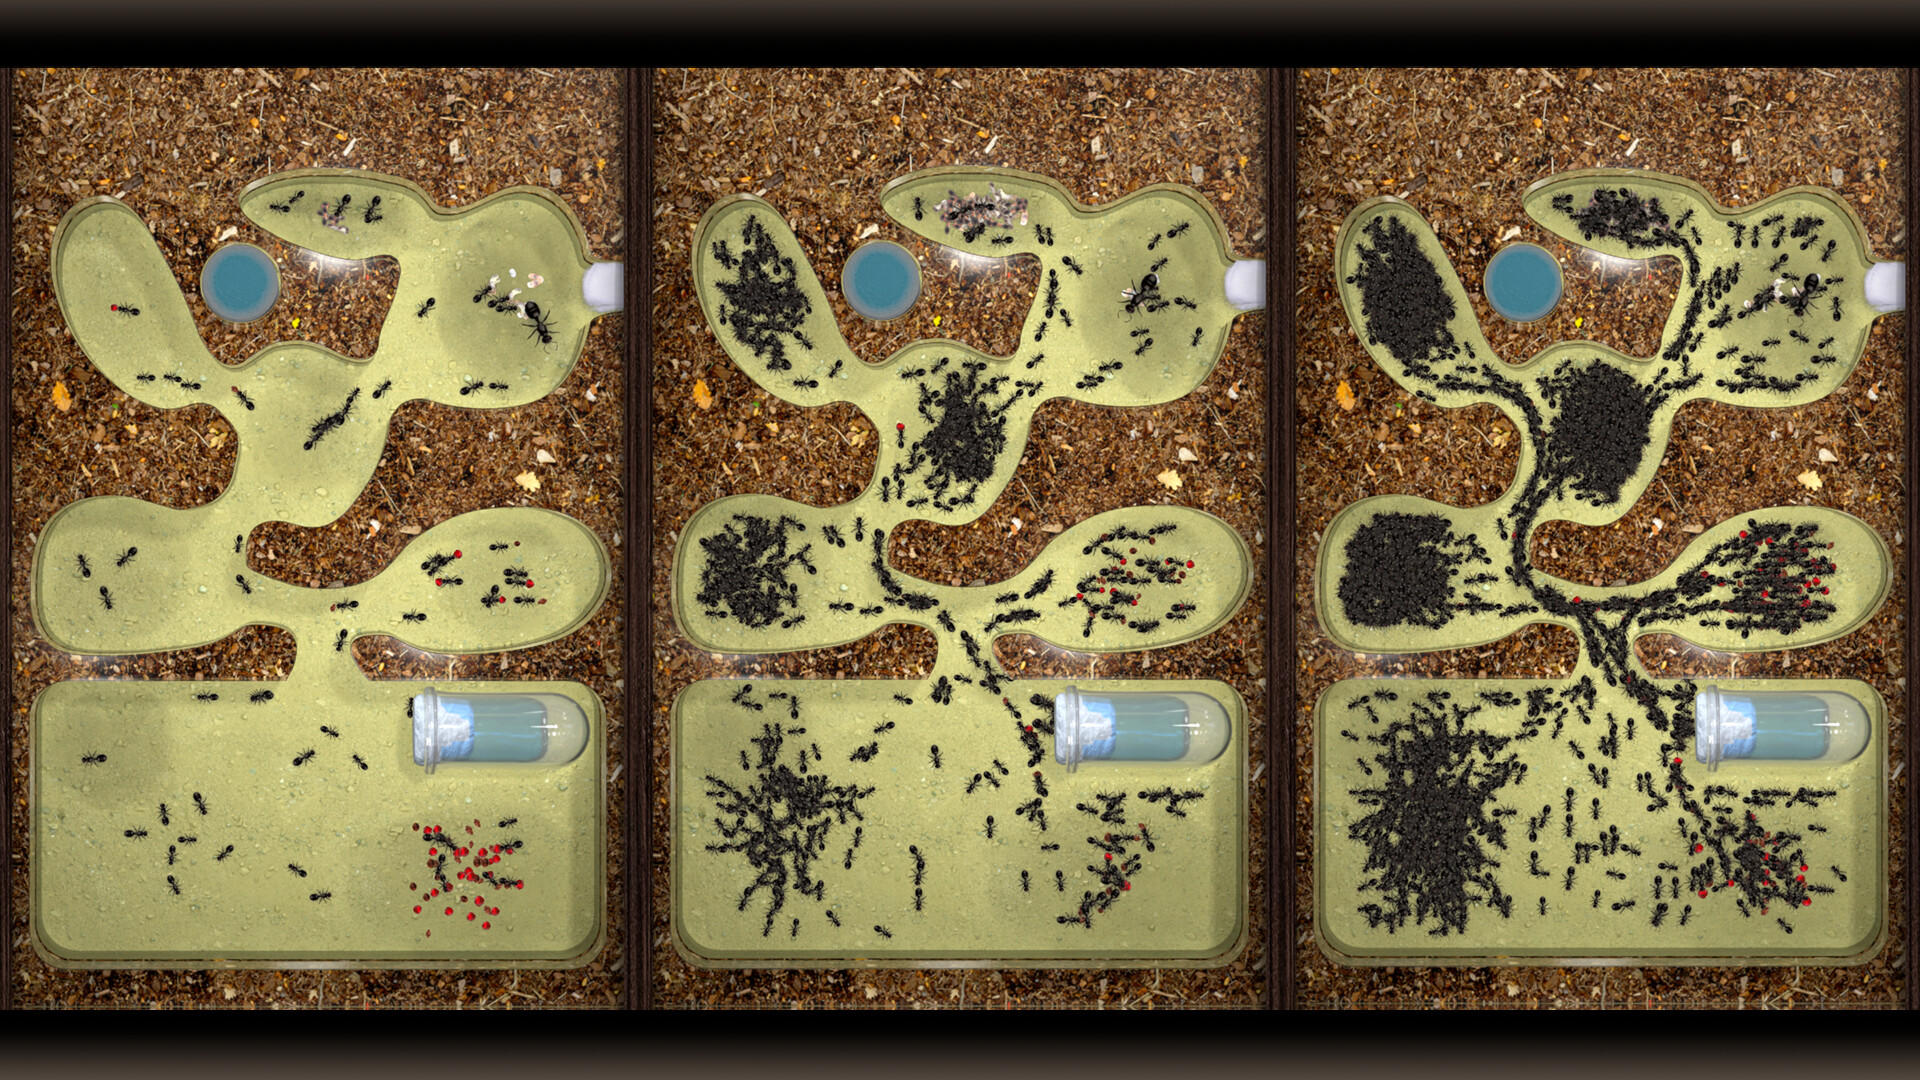 Screenshot of Ant Farm Simulator